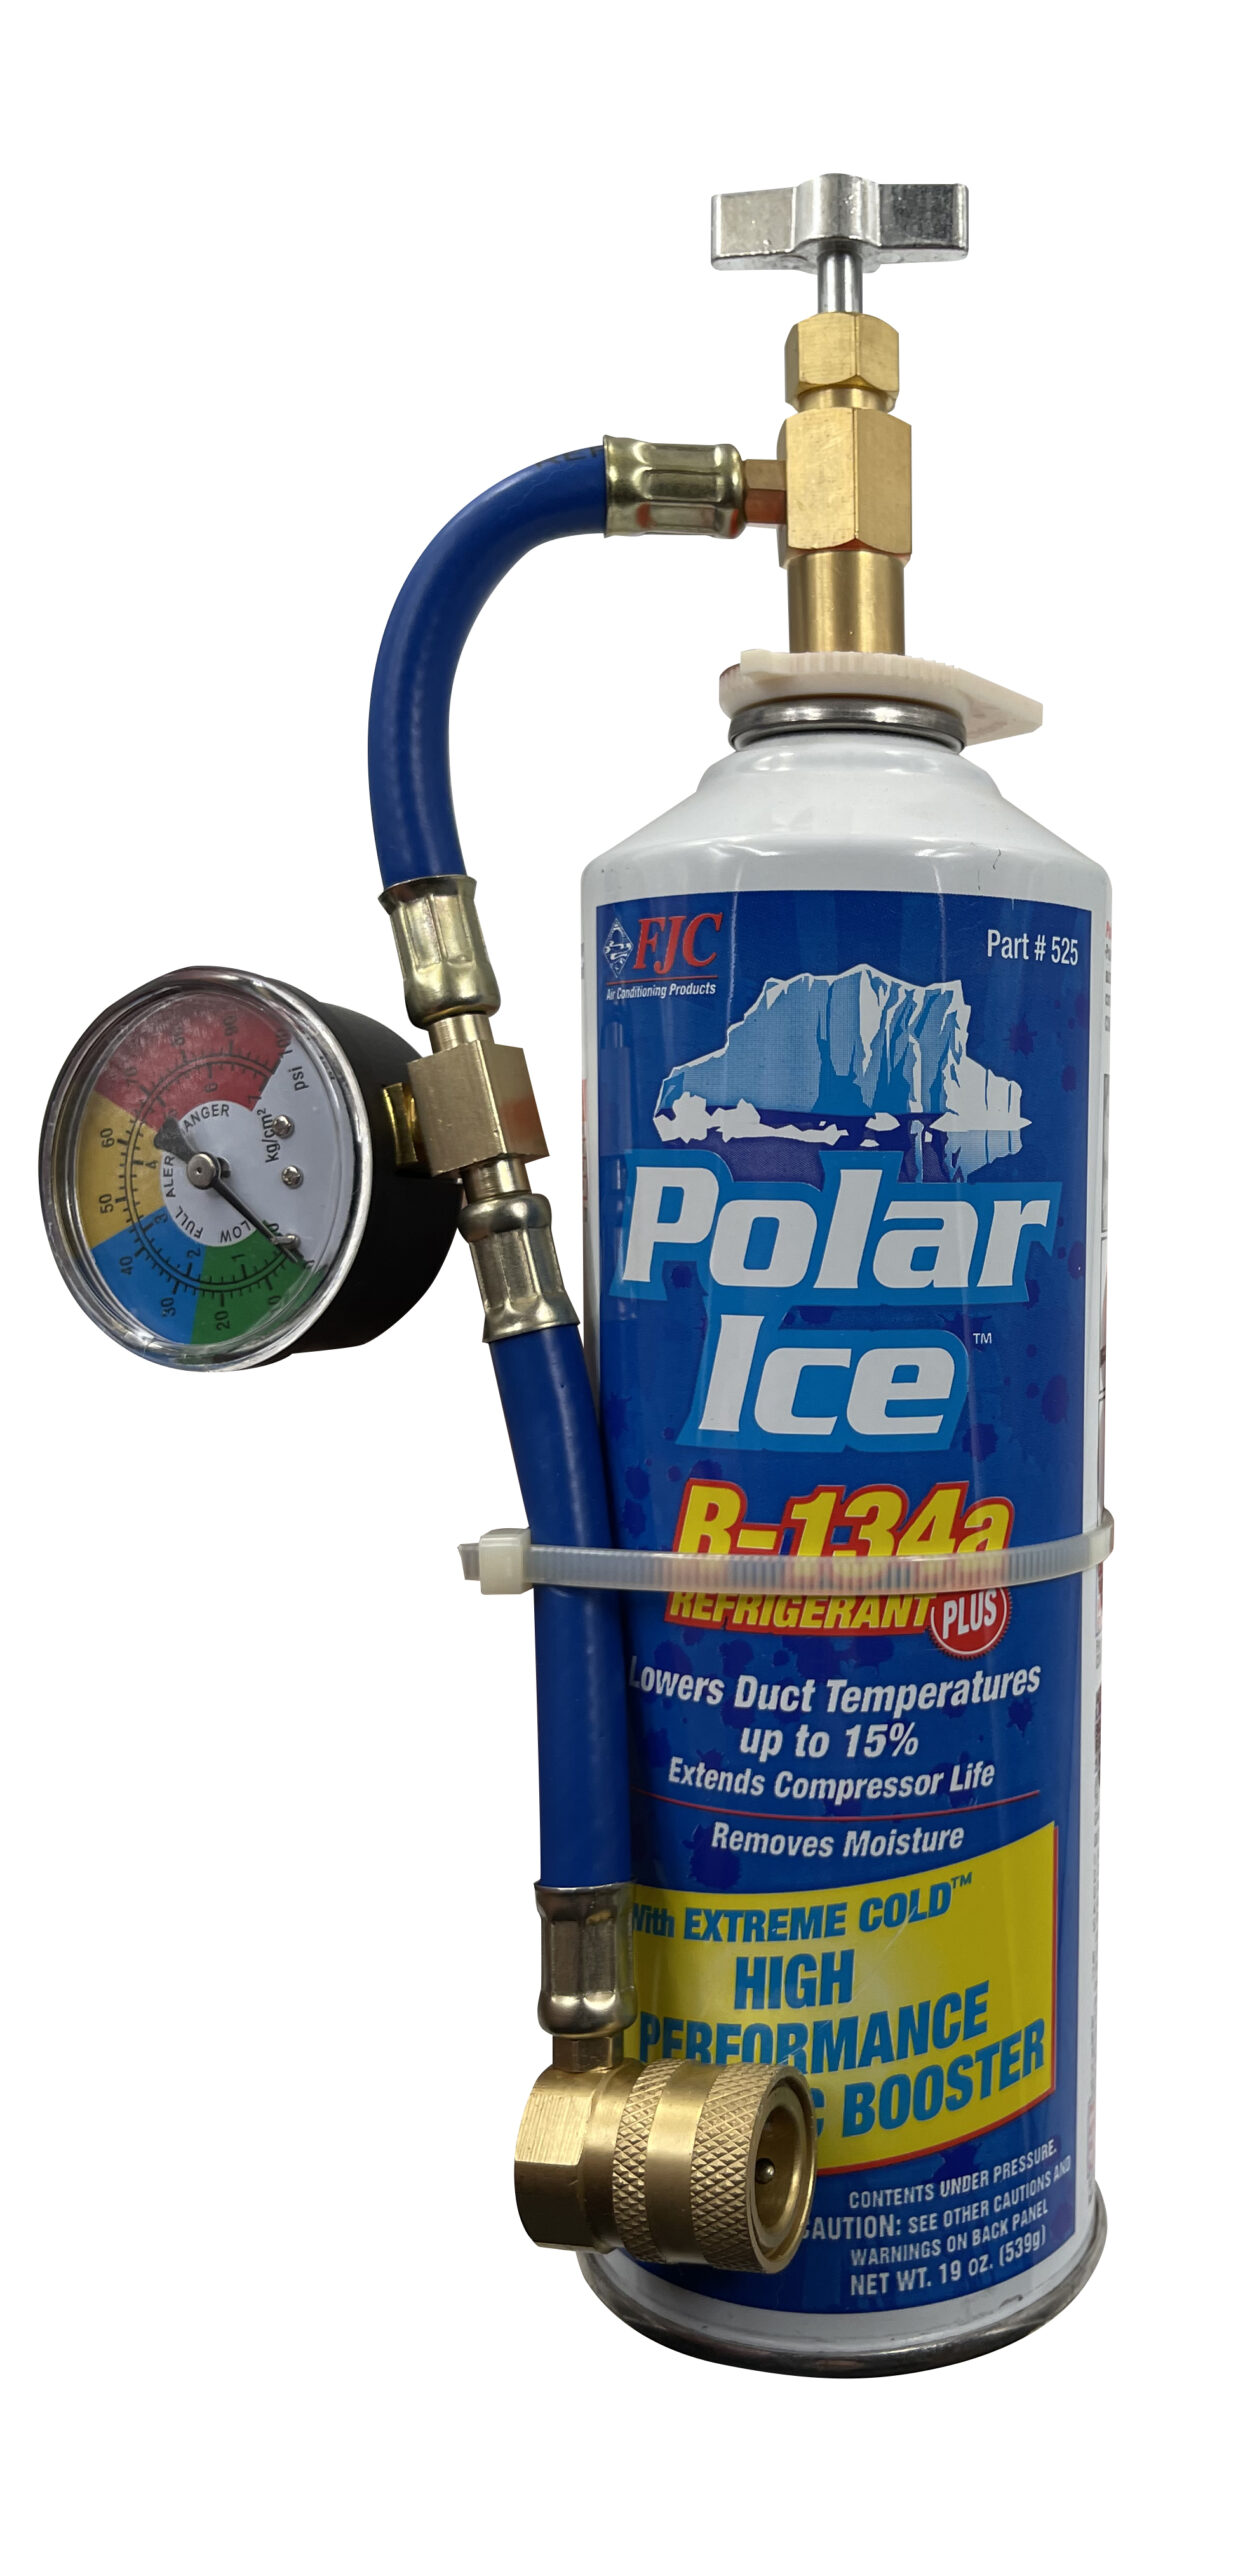 525 FJC Polar Ice Refrigerant Plus with Hose & Gauge 19 oz